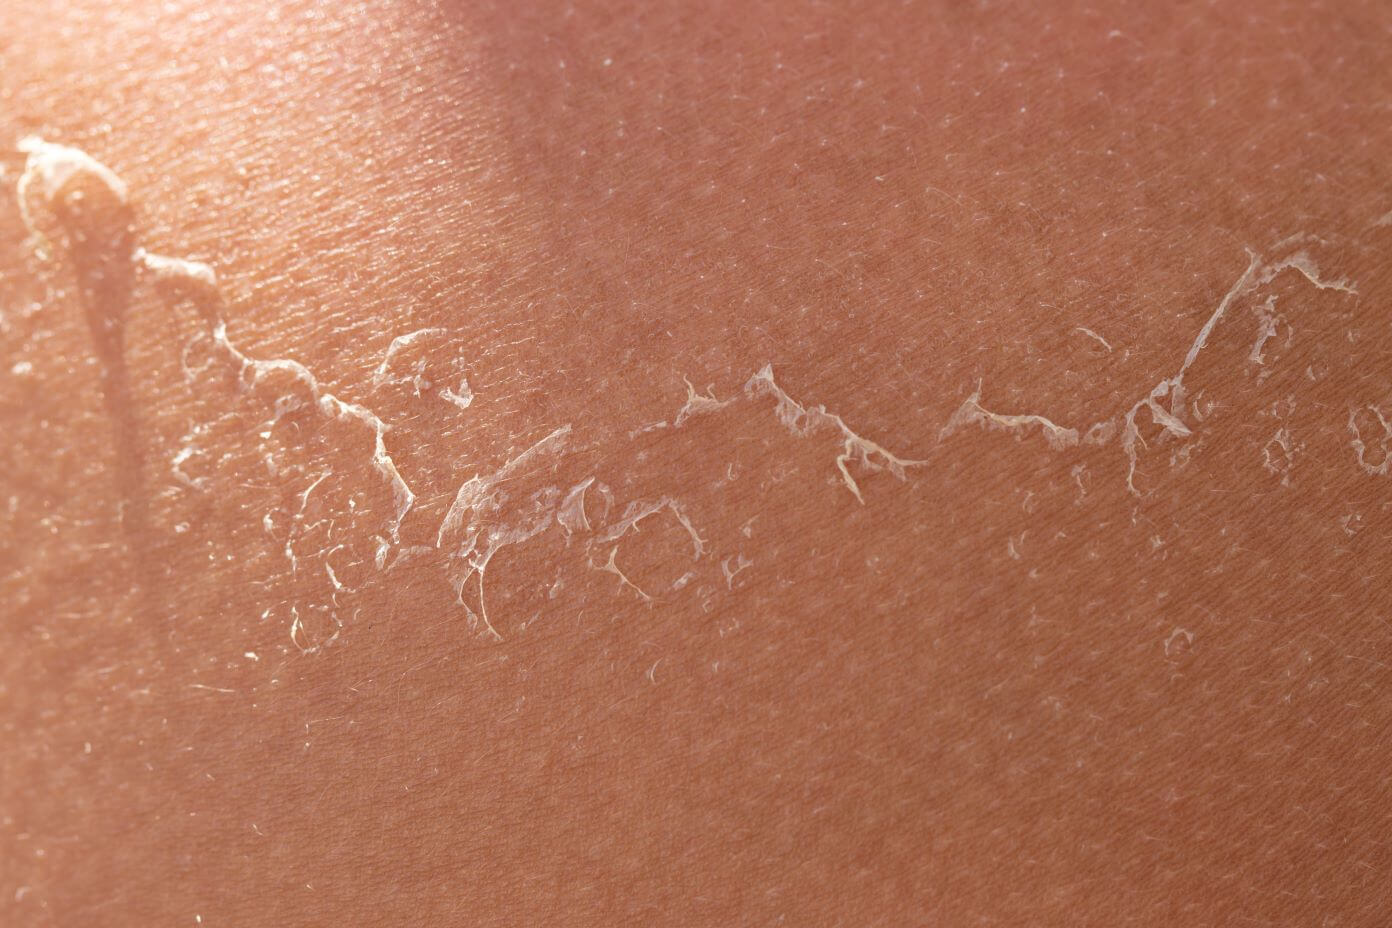 close up image of peeling skin